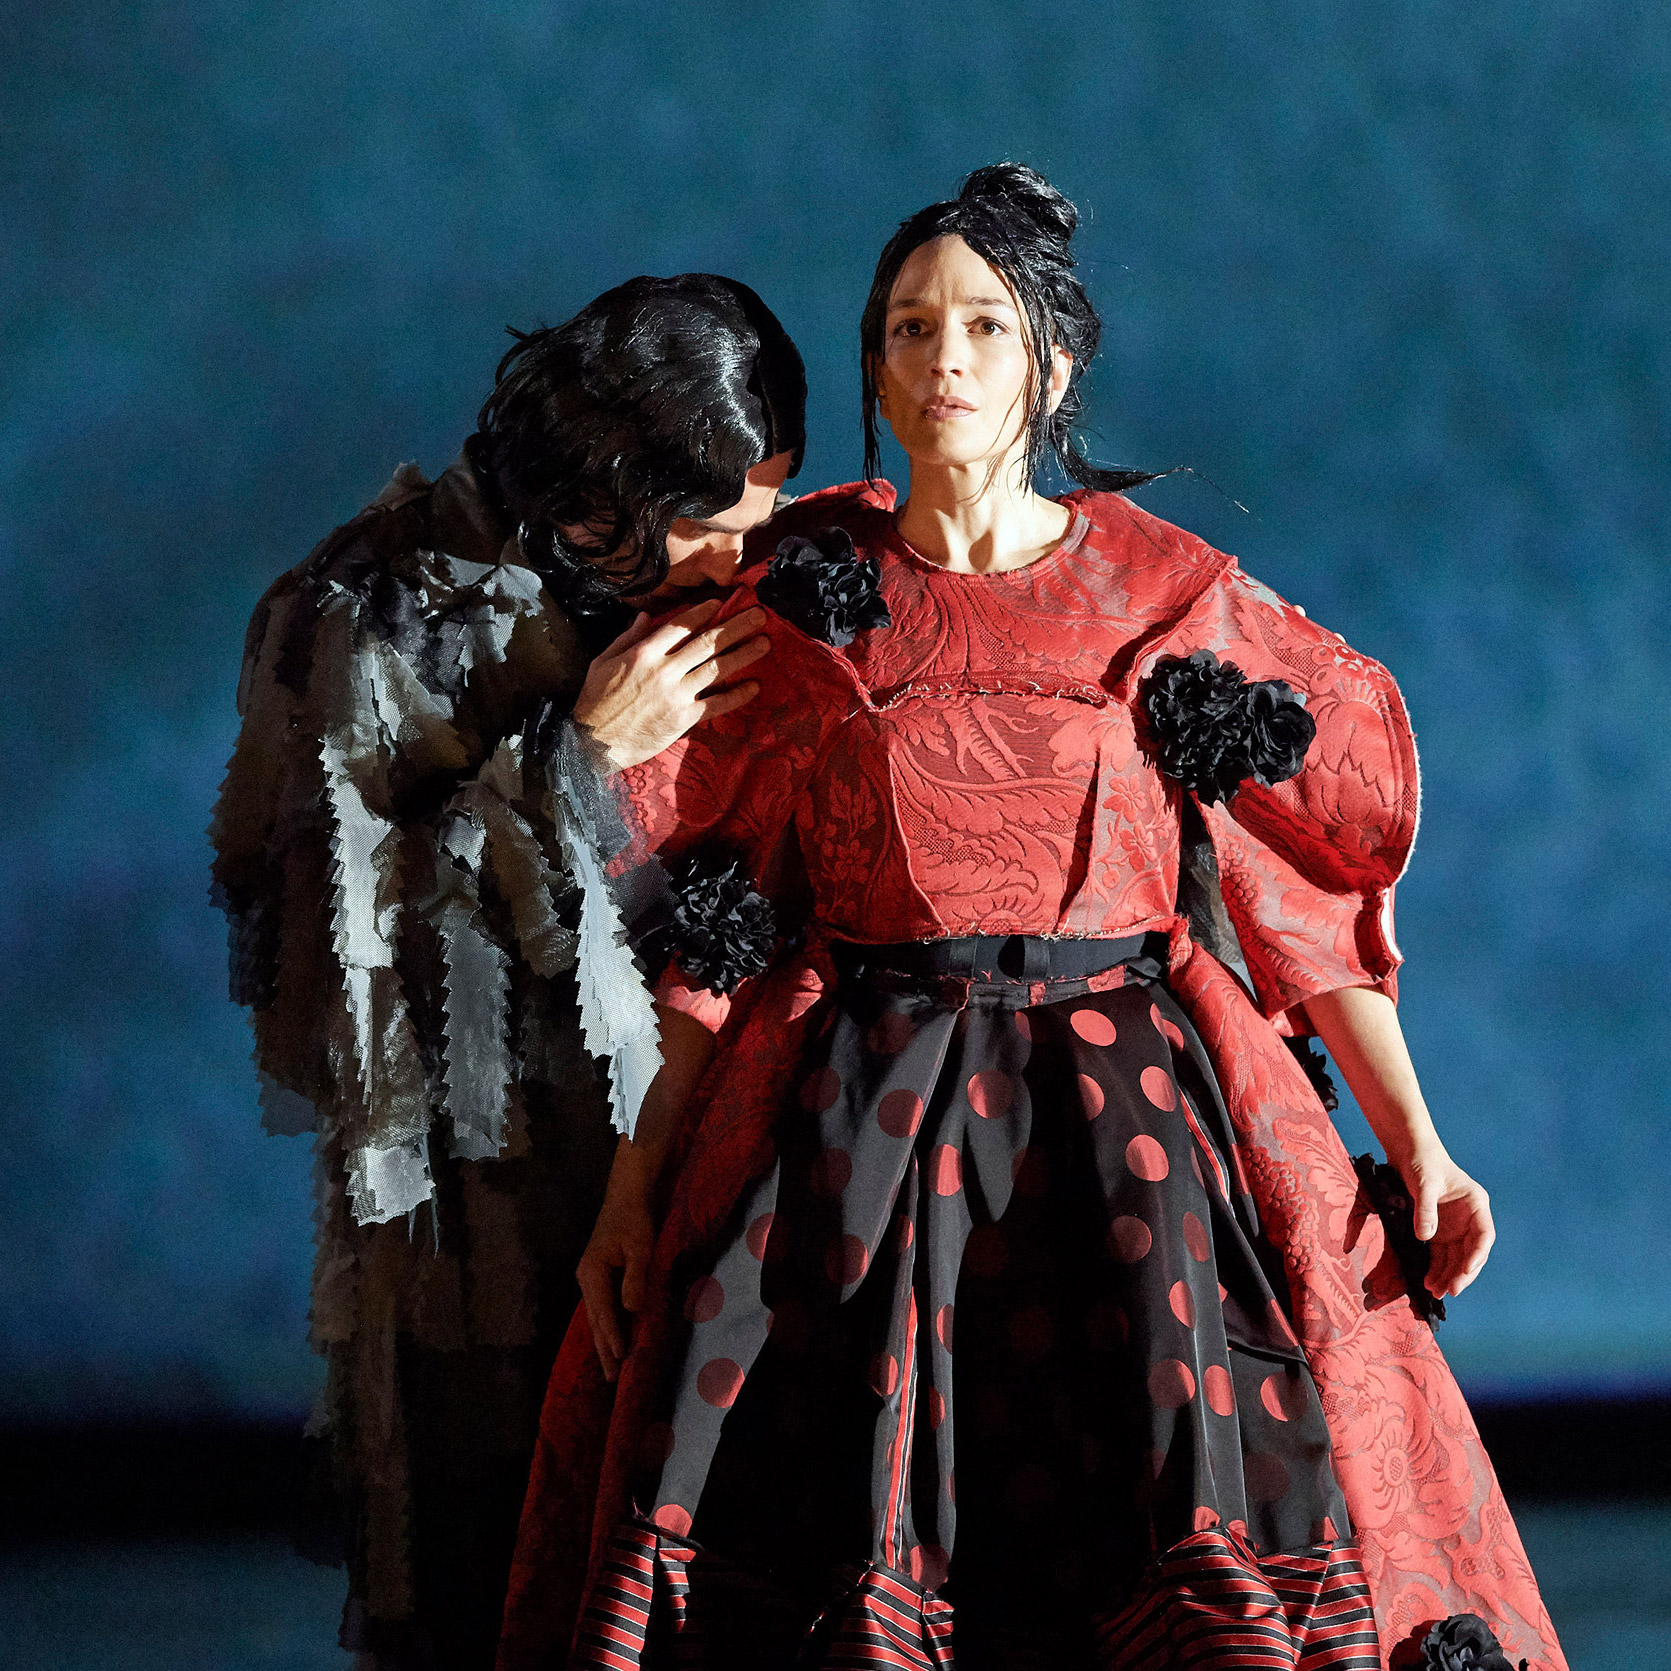 Rei Kawakubo costumes Orlando Vienna State Opera